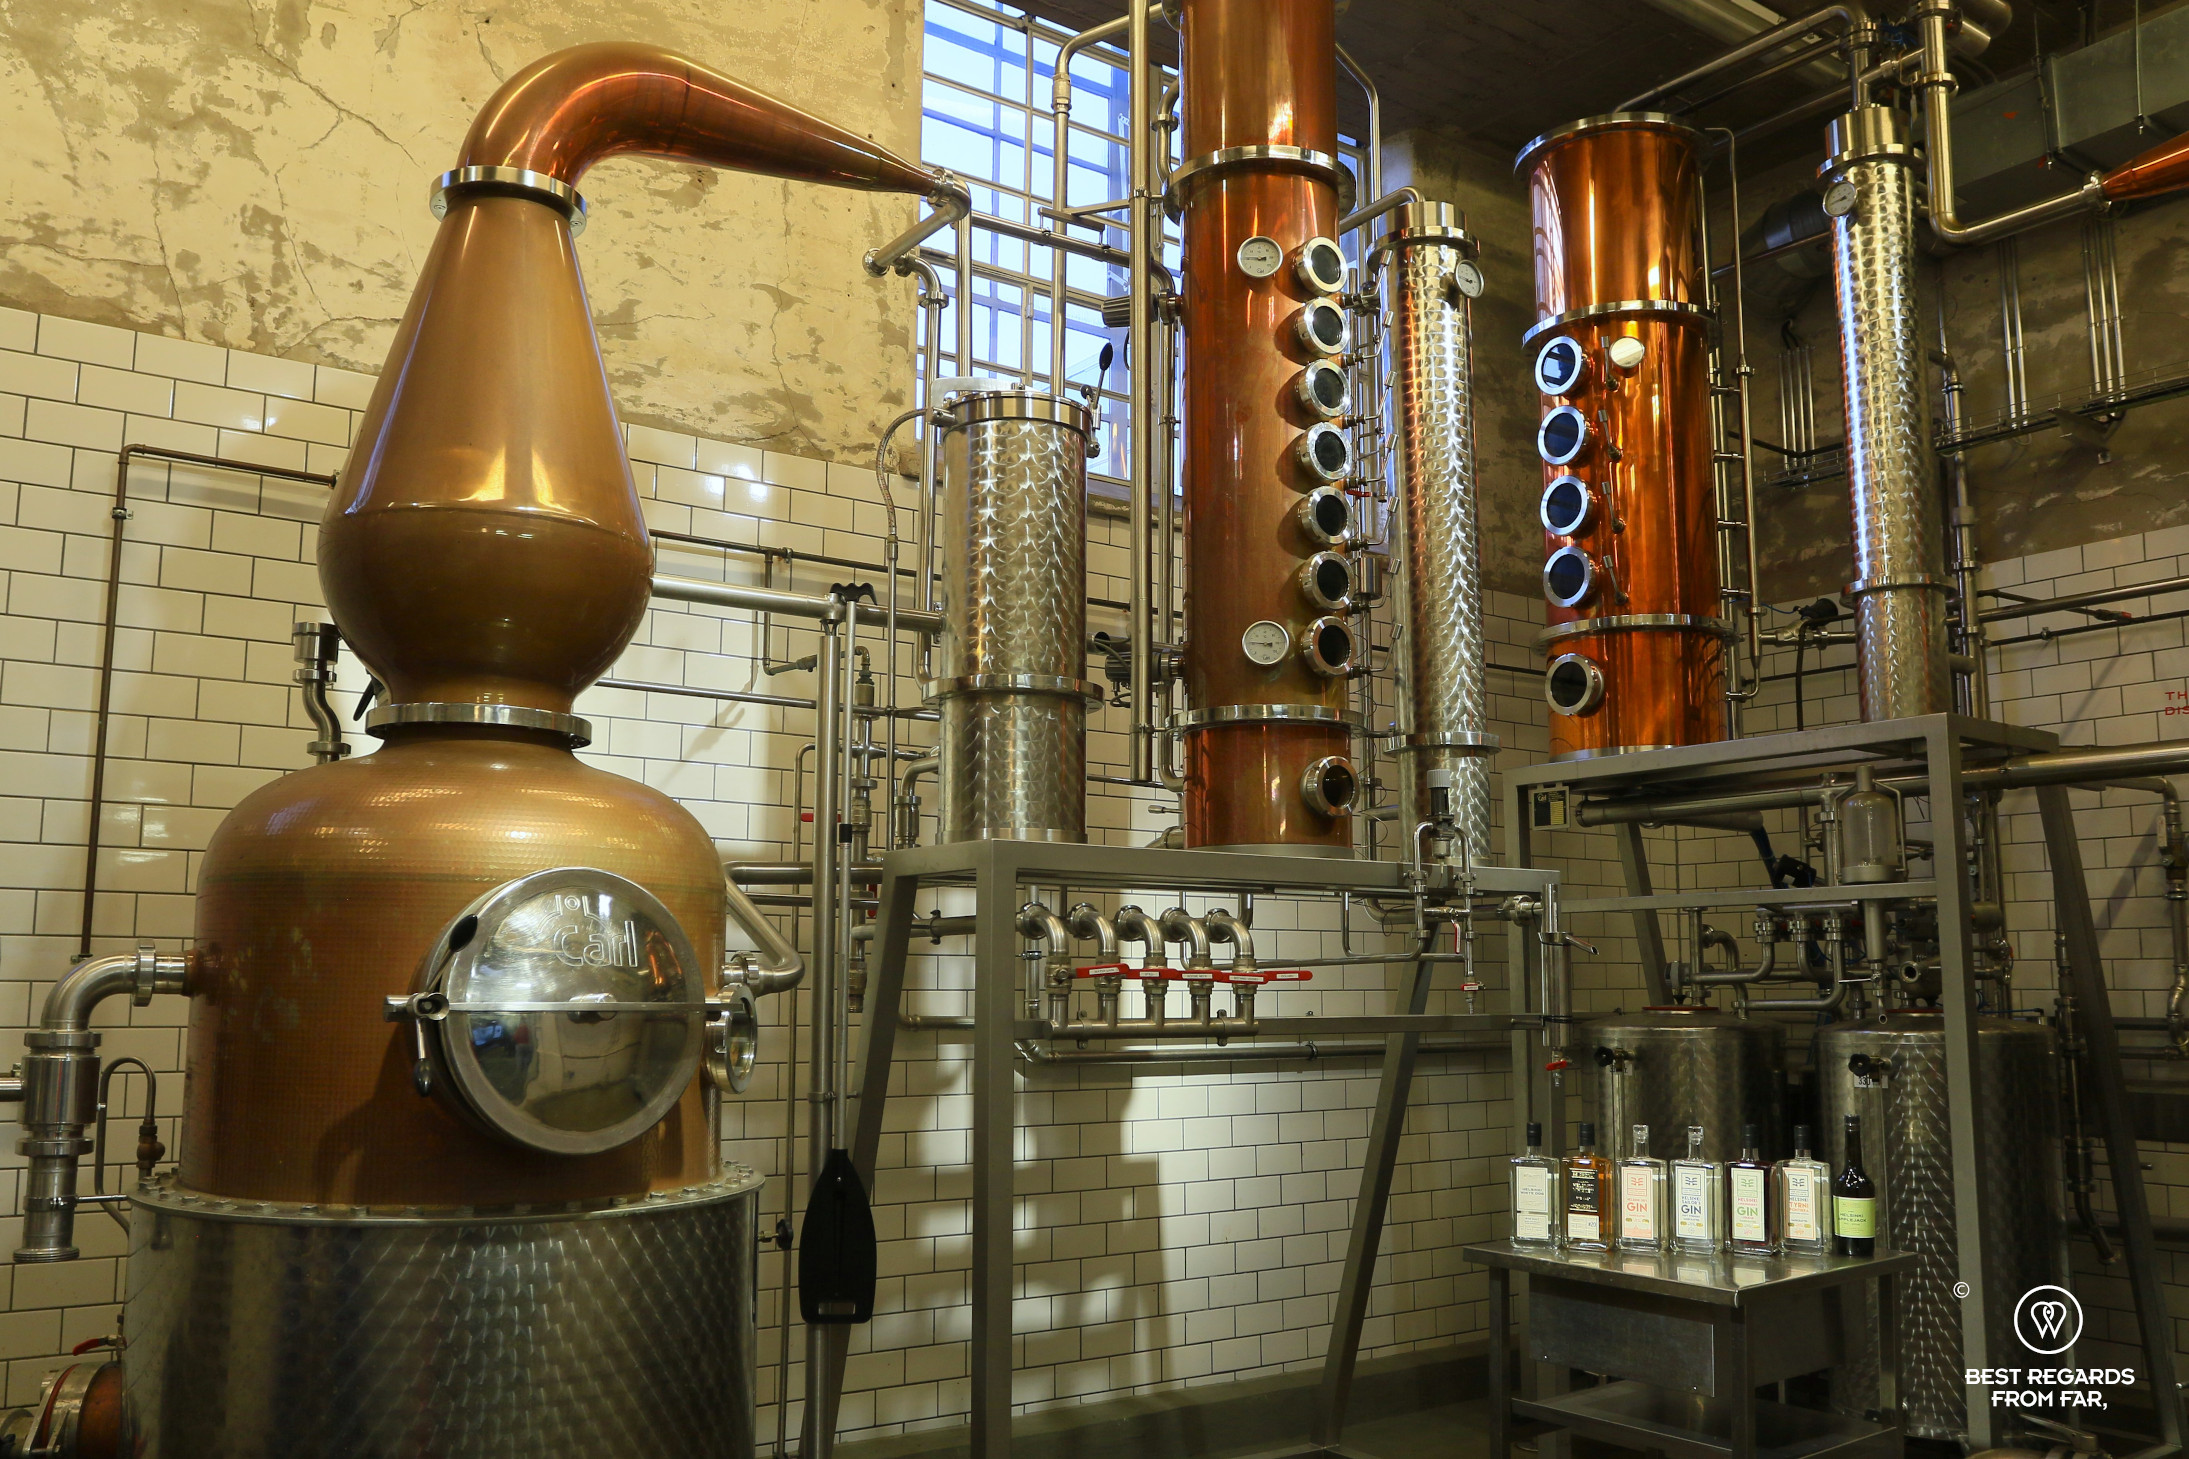 The Tislaamo distillery behind the scenes, Helsinki